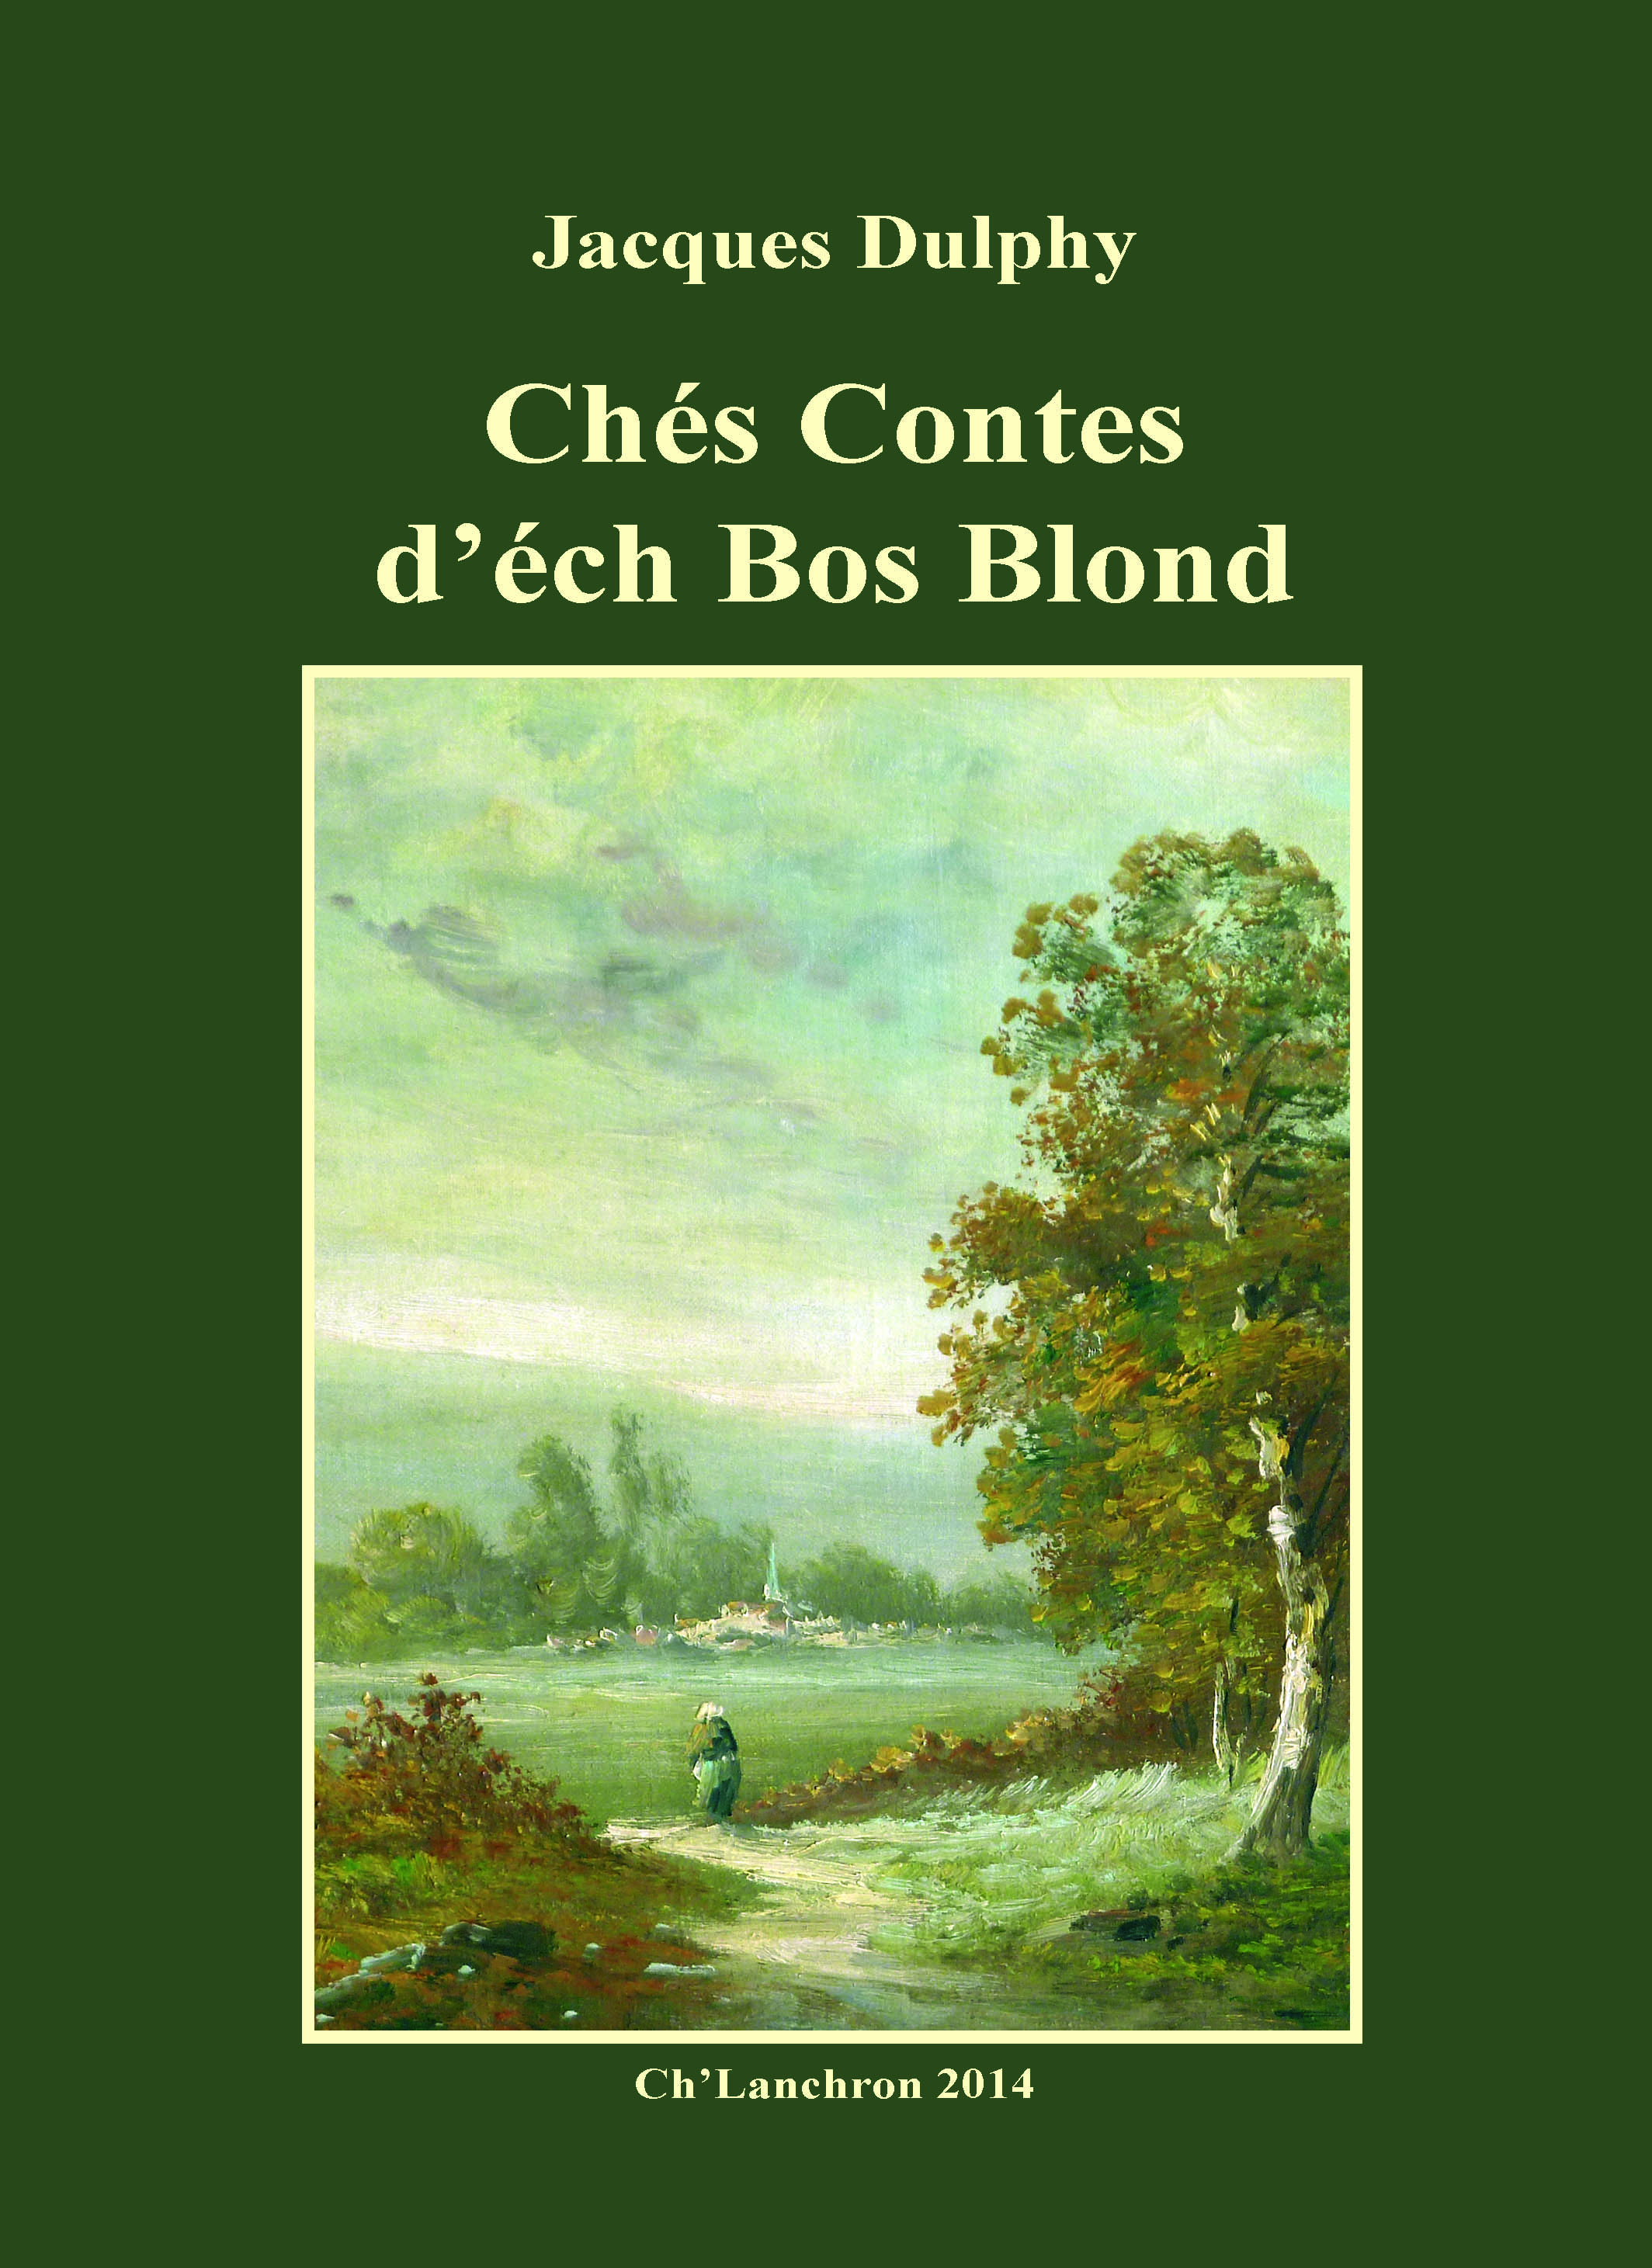 <a href="/node/10965">Chés contes d'éch Bos Blond</a>